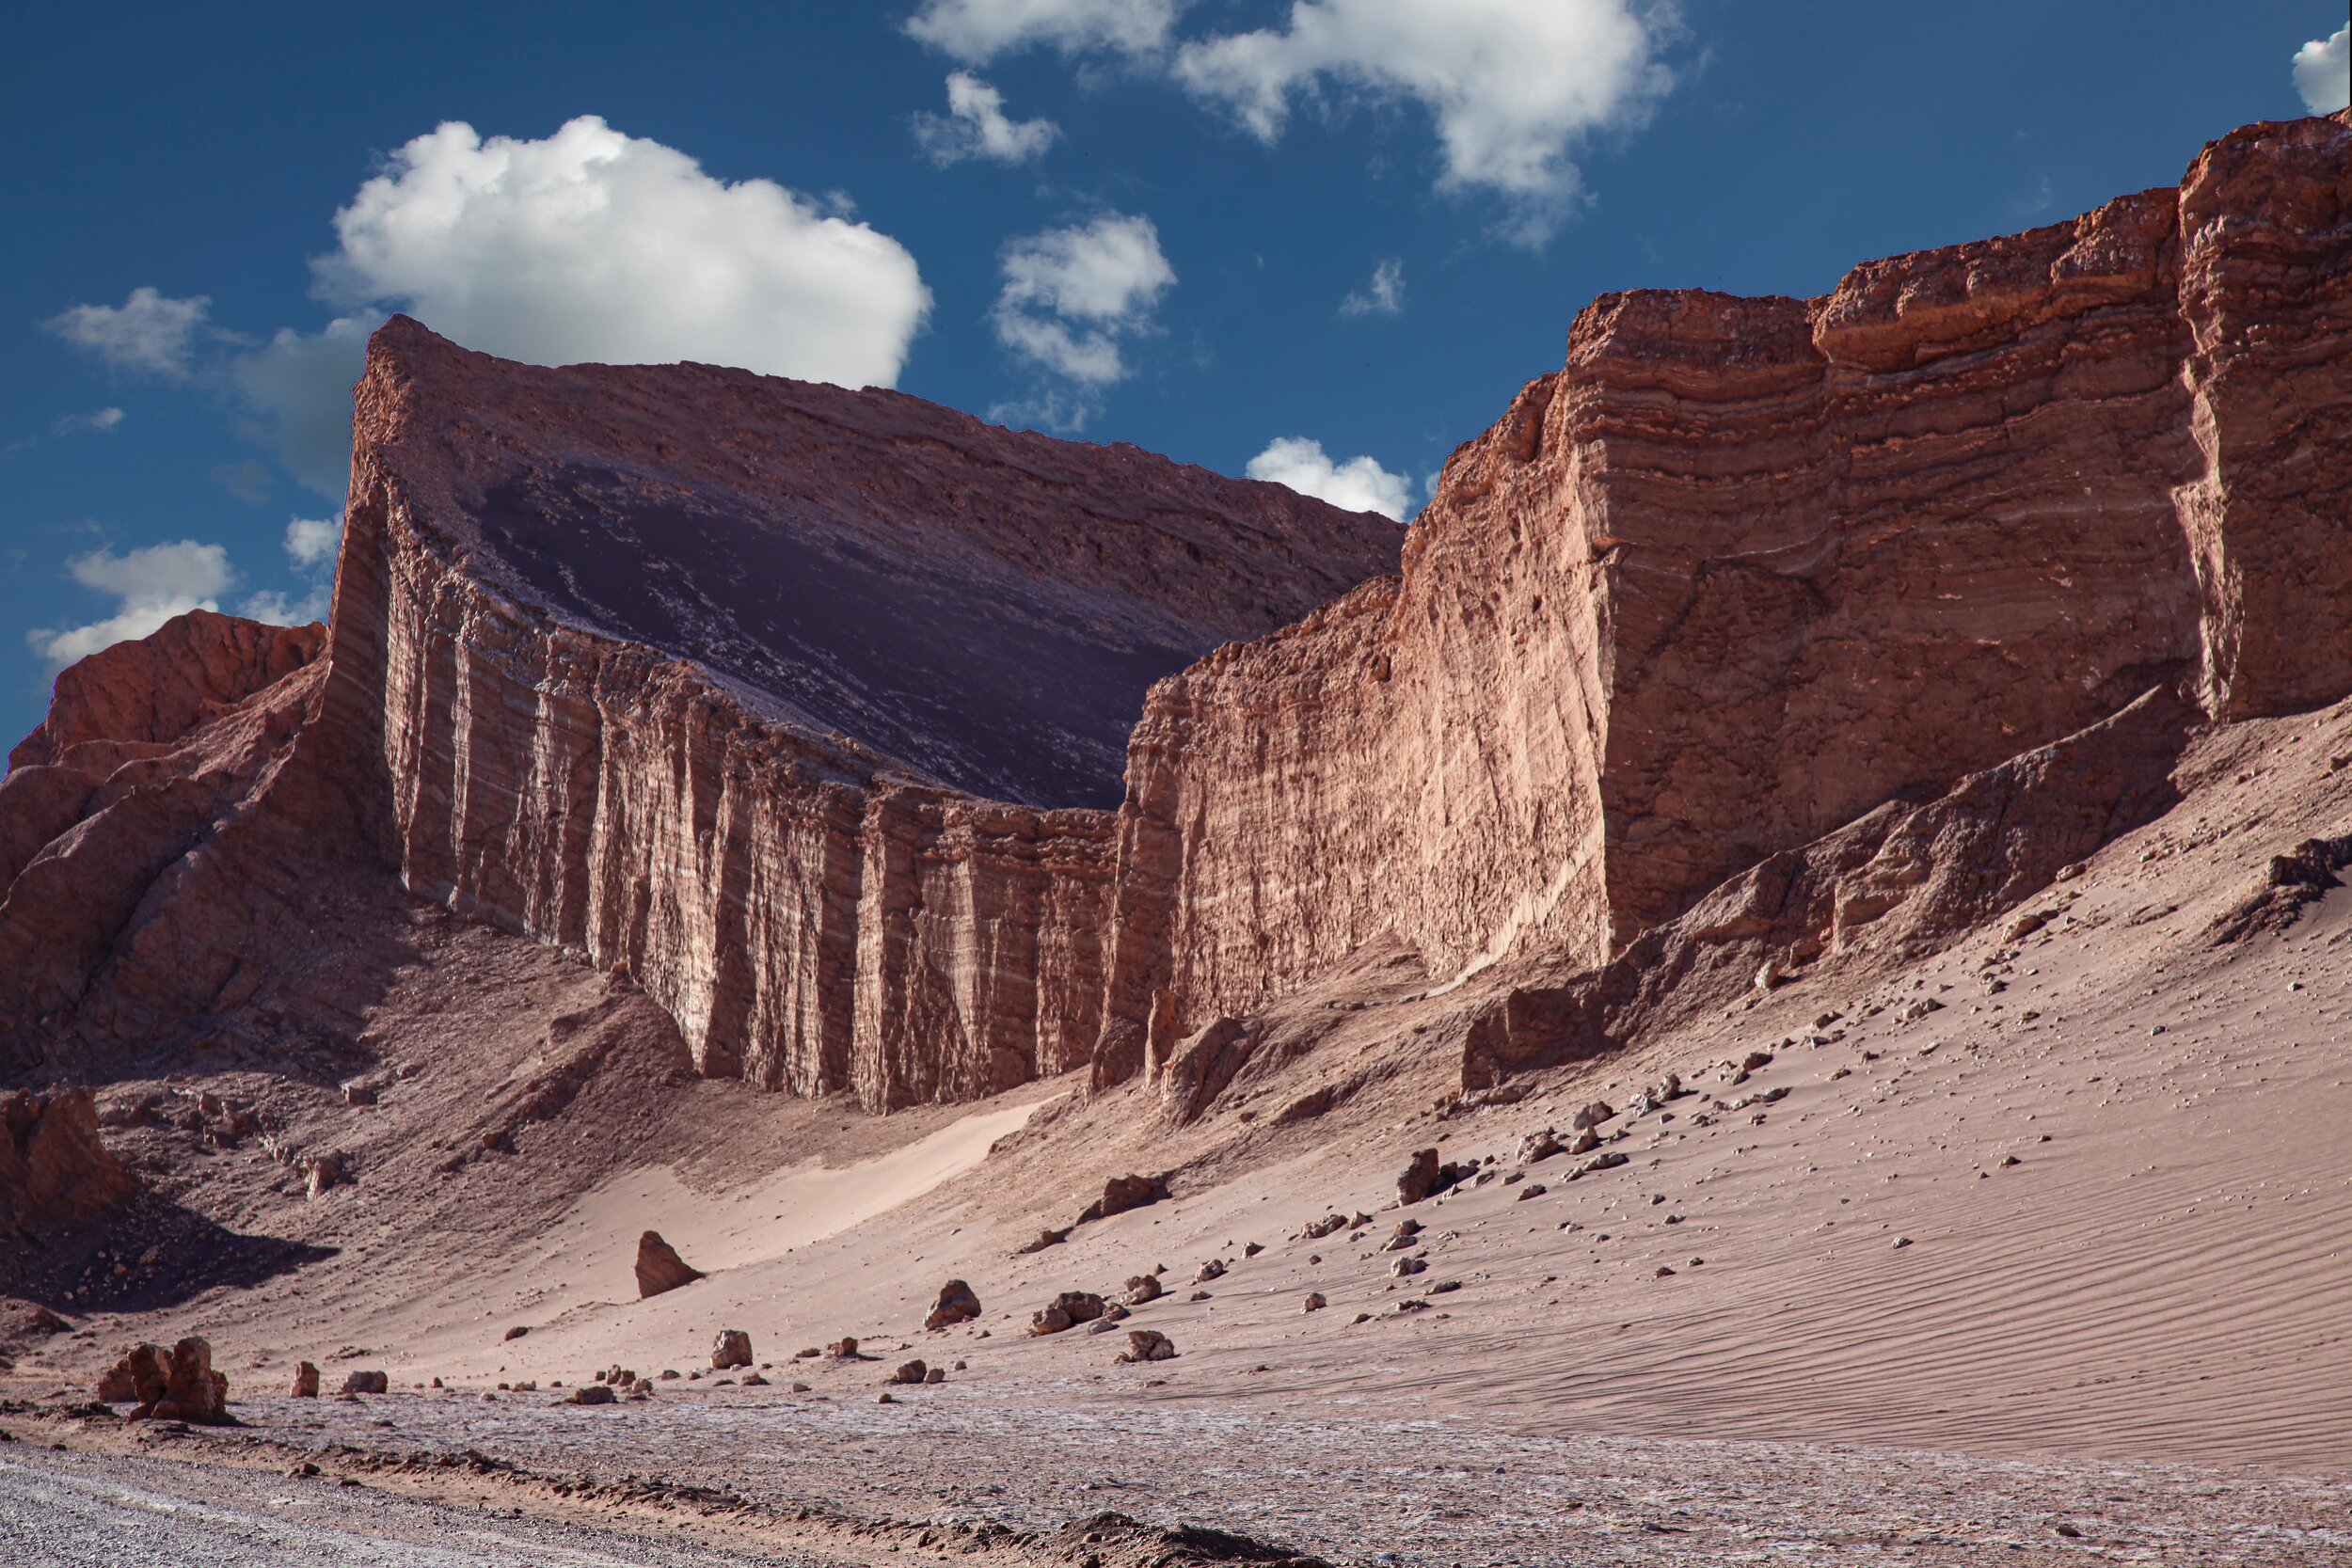  Atacama Desert, Chile         